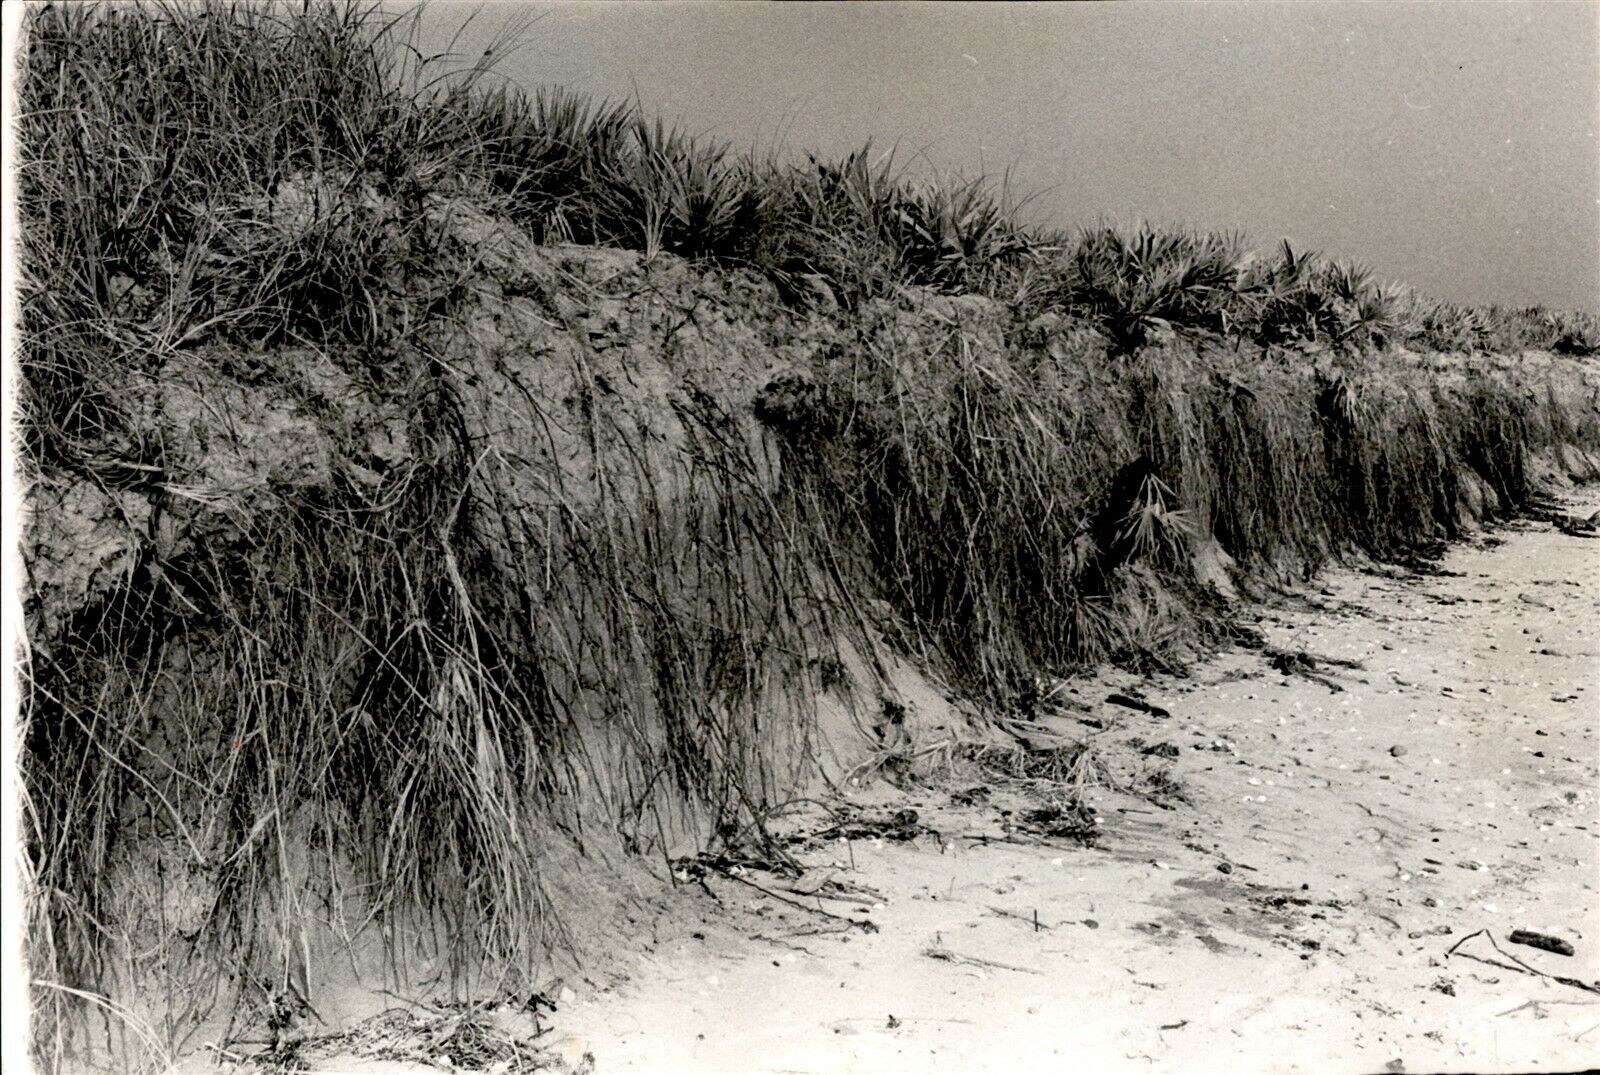 LG903 1962 Original Photo BEACH EROSION PROBLEM Receding Coastal Sand MIAMI